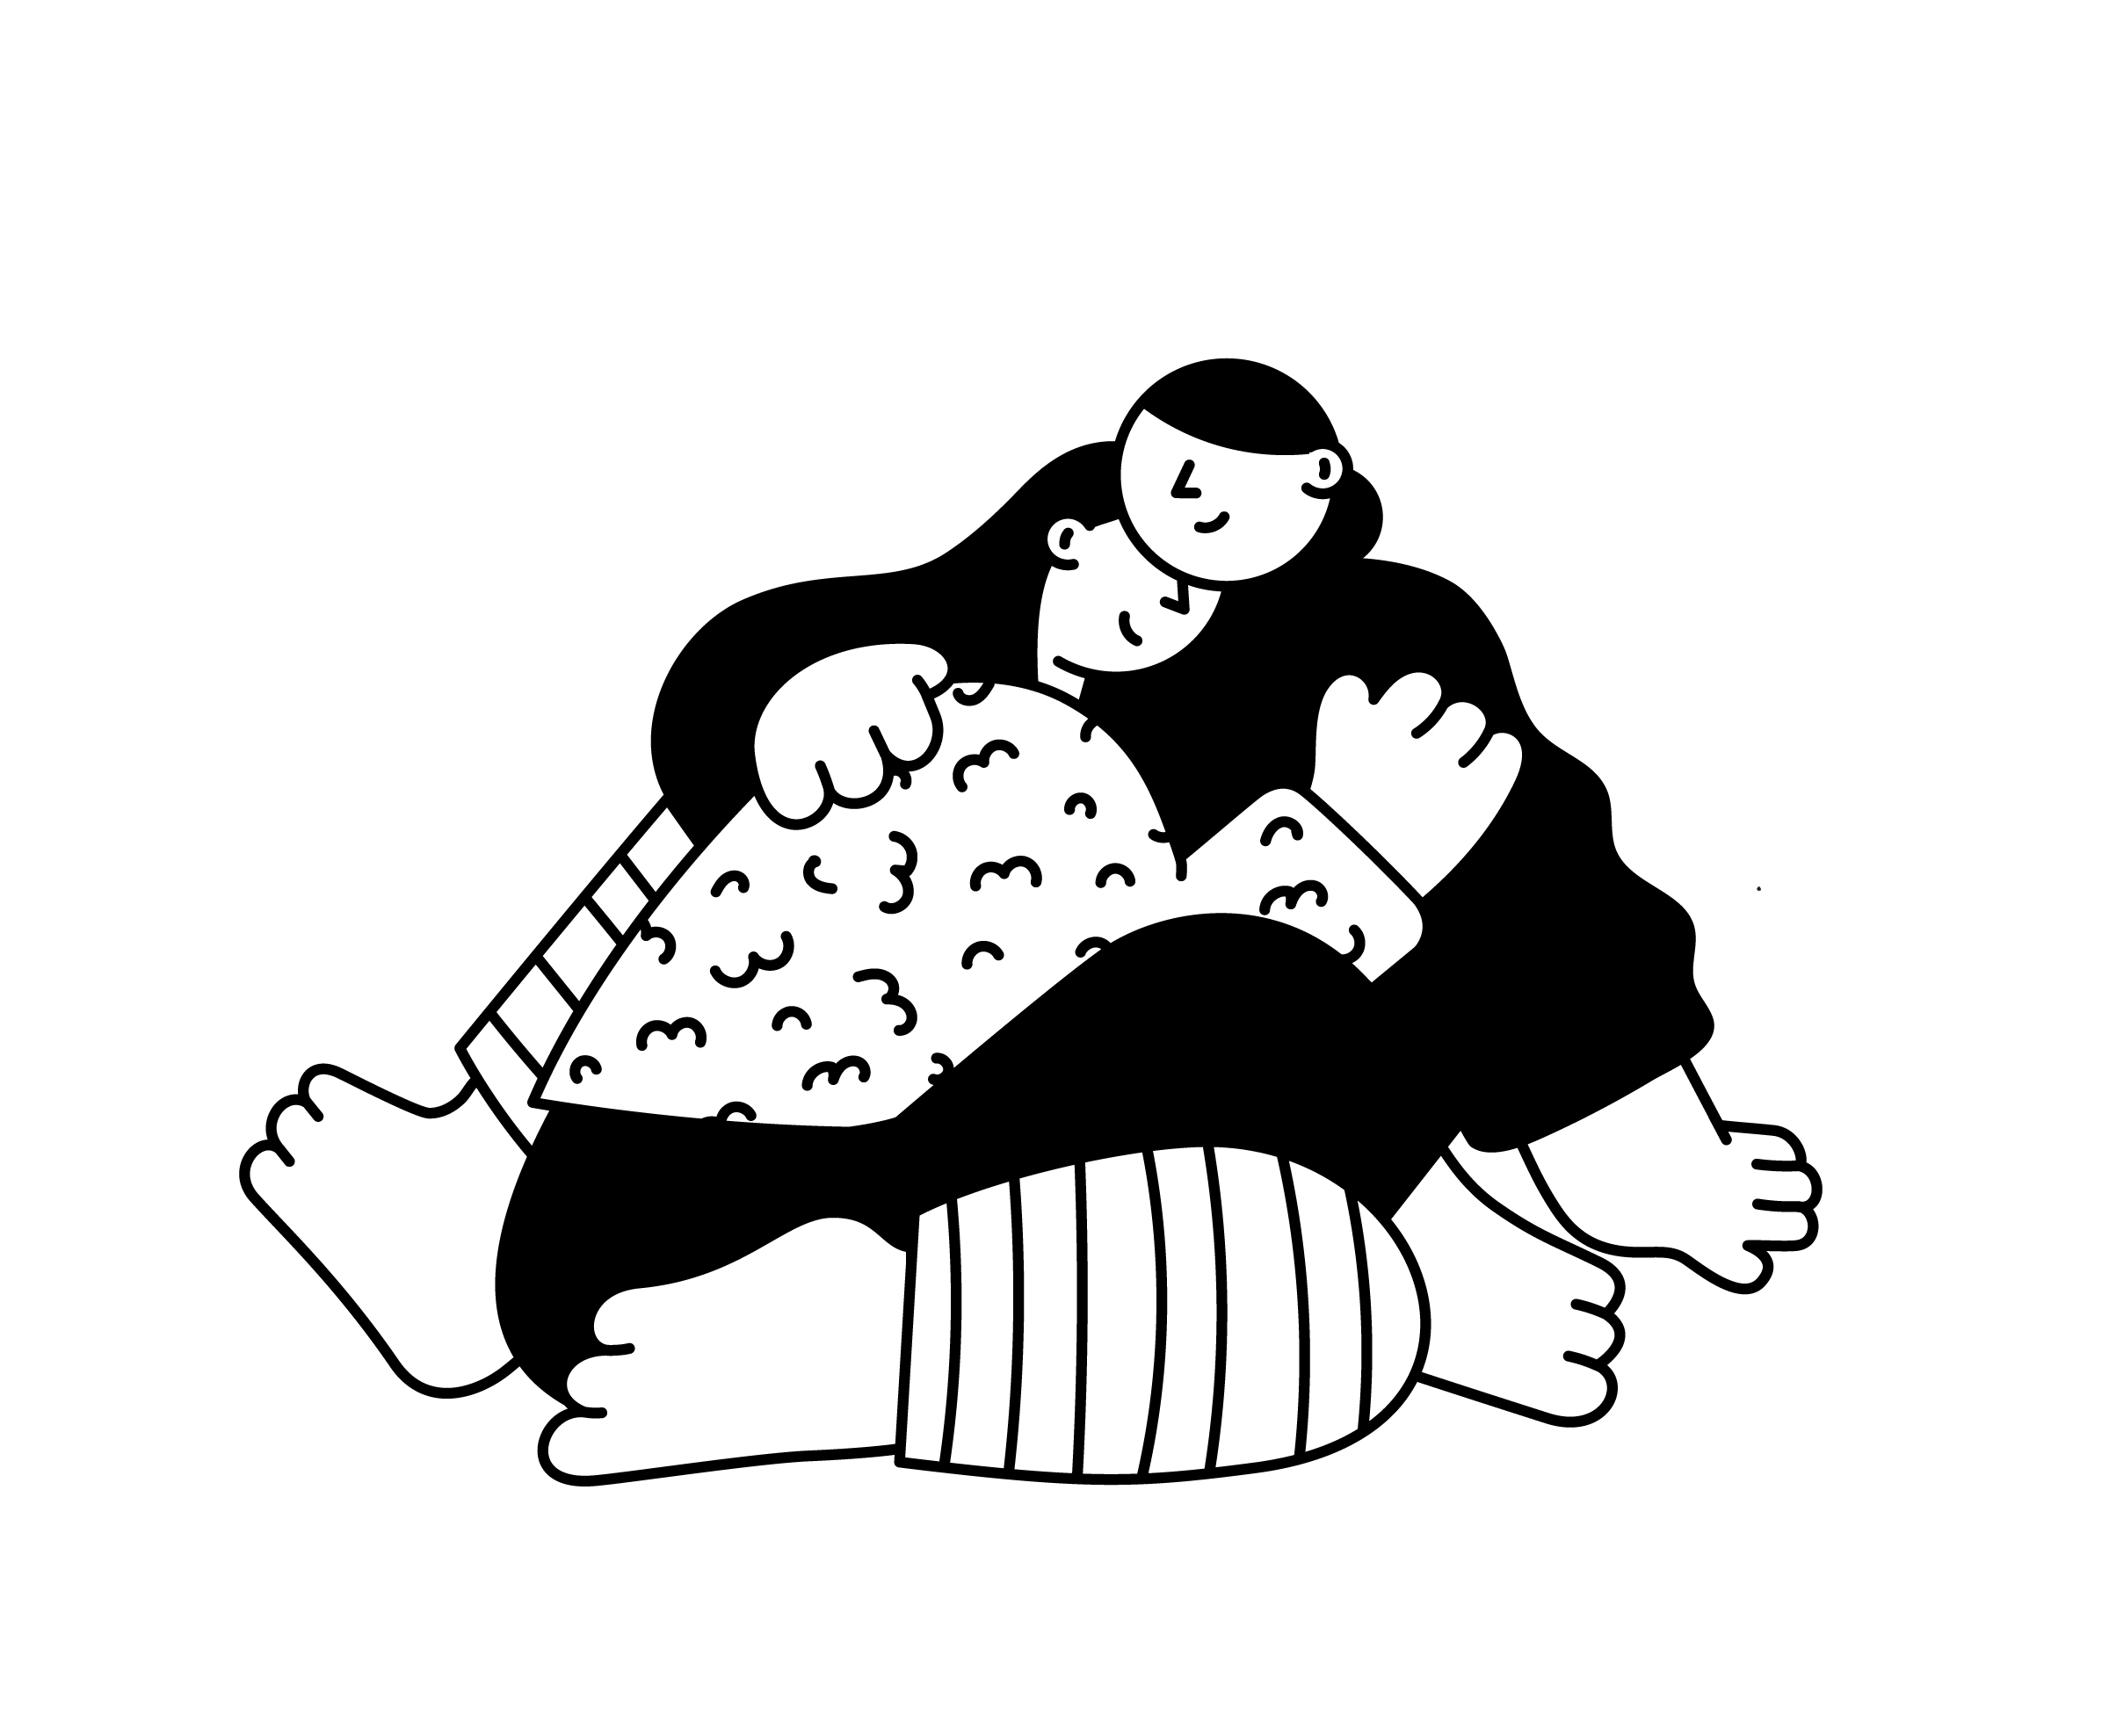 Loving hug illustration